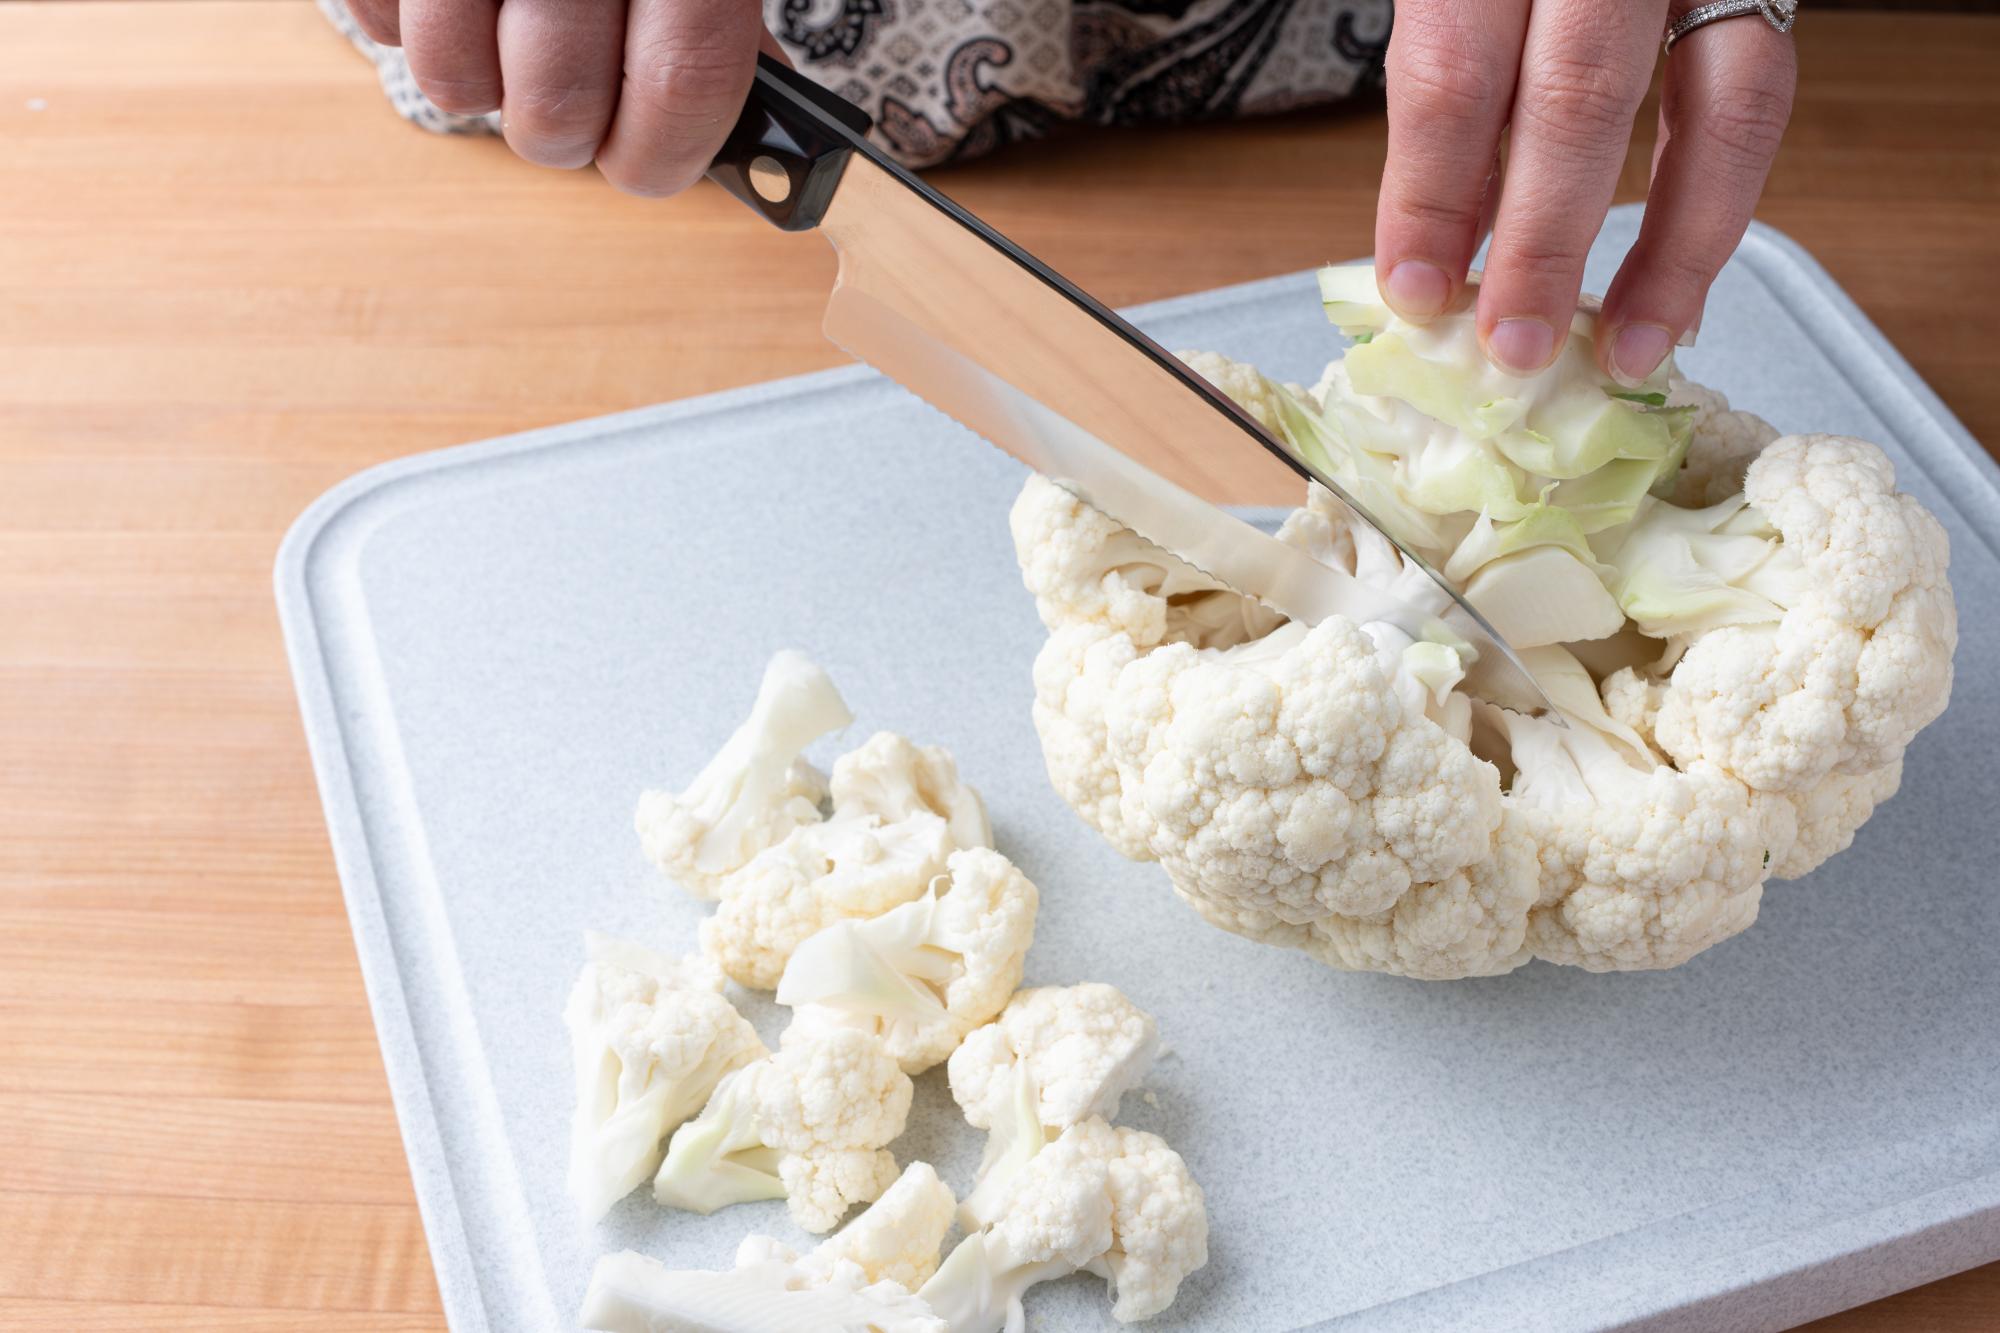 Using a Gourmet Prep knife to cut the cauliflower.